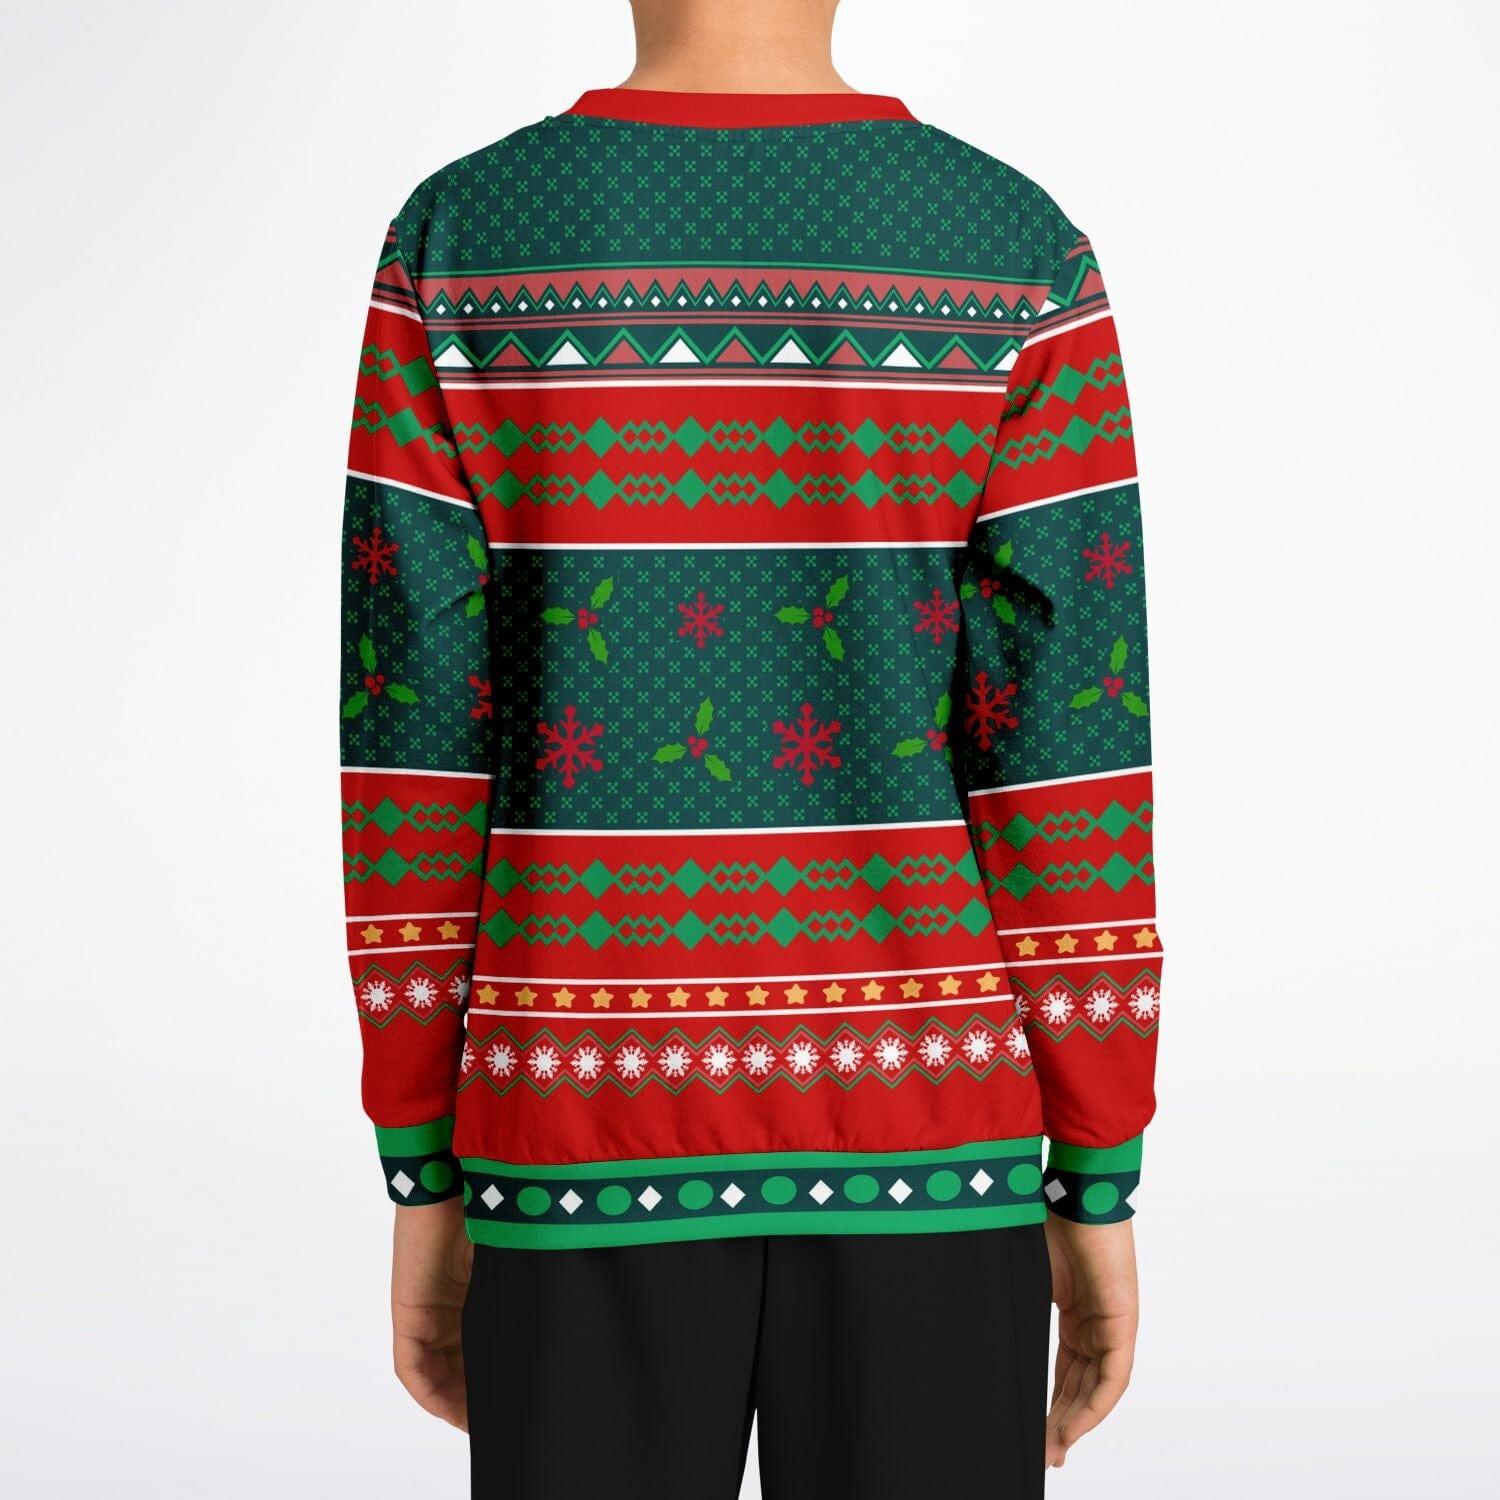 I put out for Santa Kids Unisex Ugly Christmas Sweatshirt - TopKoalaTee